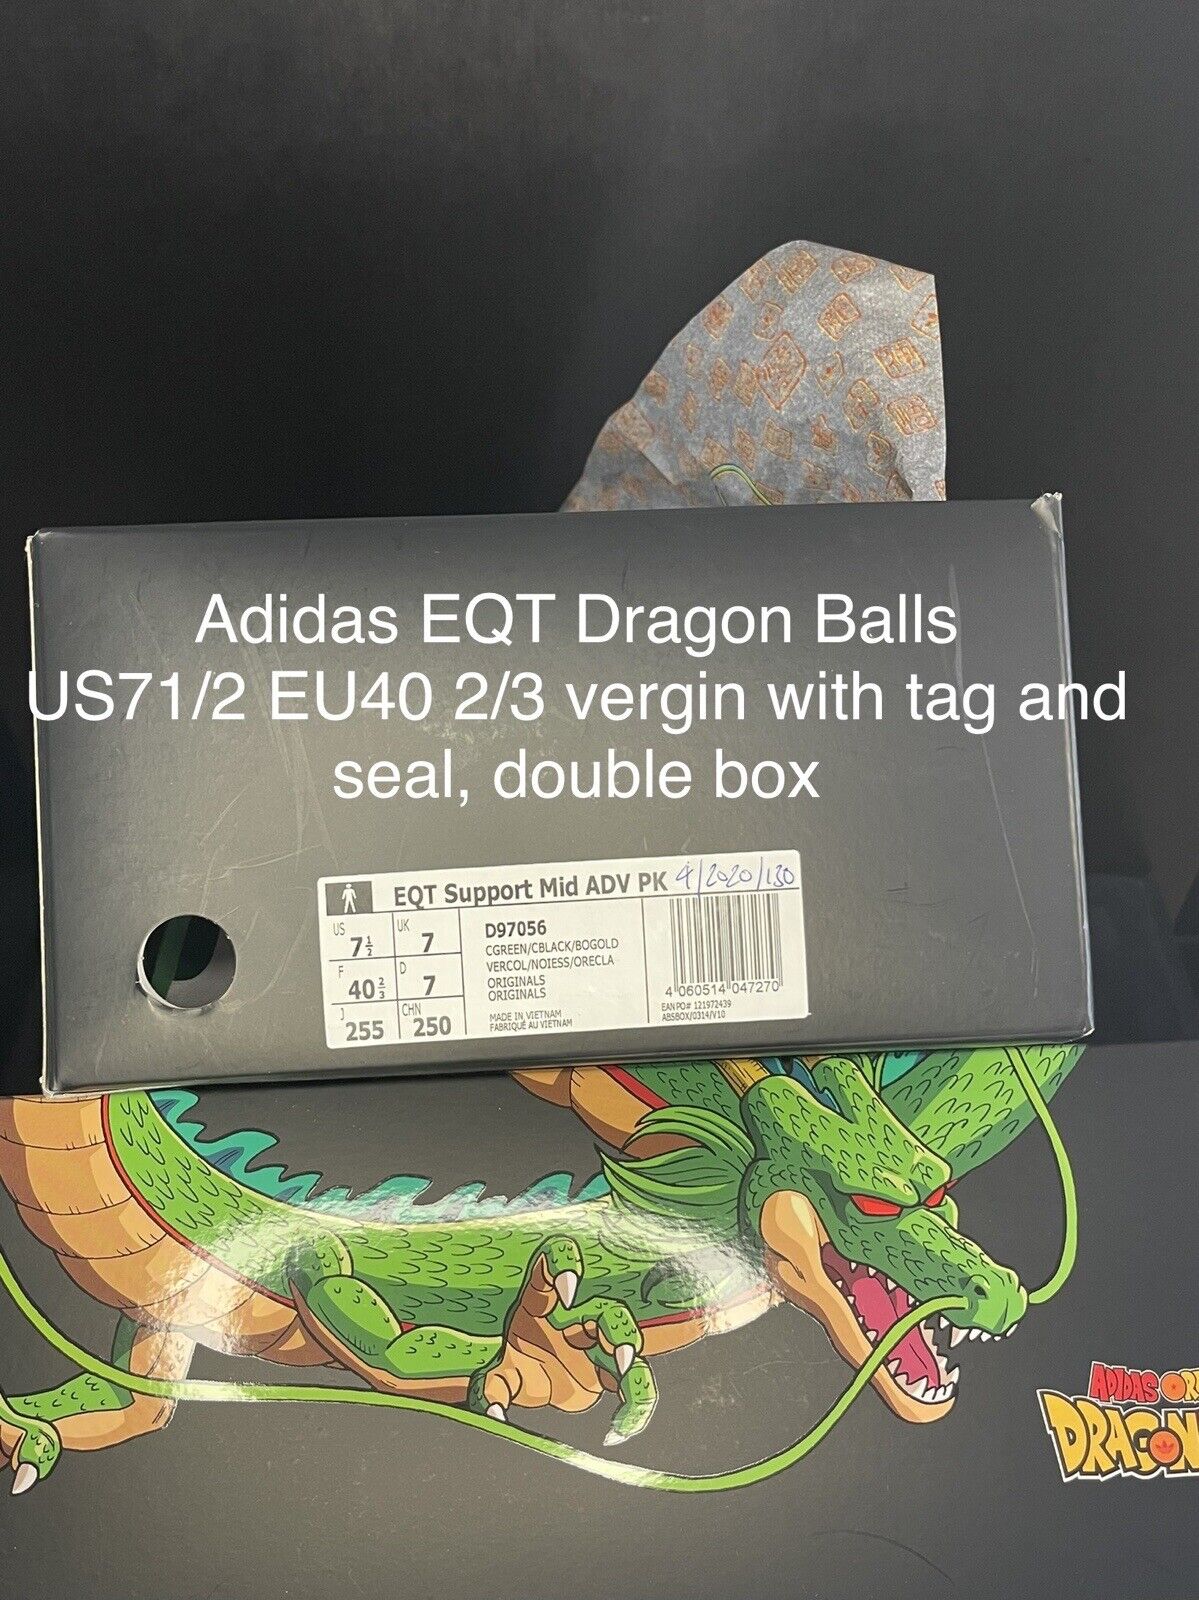 Shenron Dragon Ball Z x Adidas EQT Support Mid ADV PK D97056 EU 40 23, US 7,5